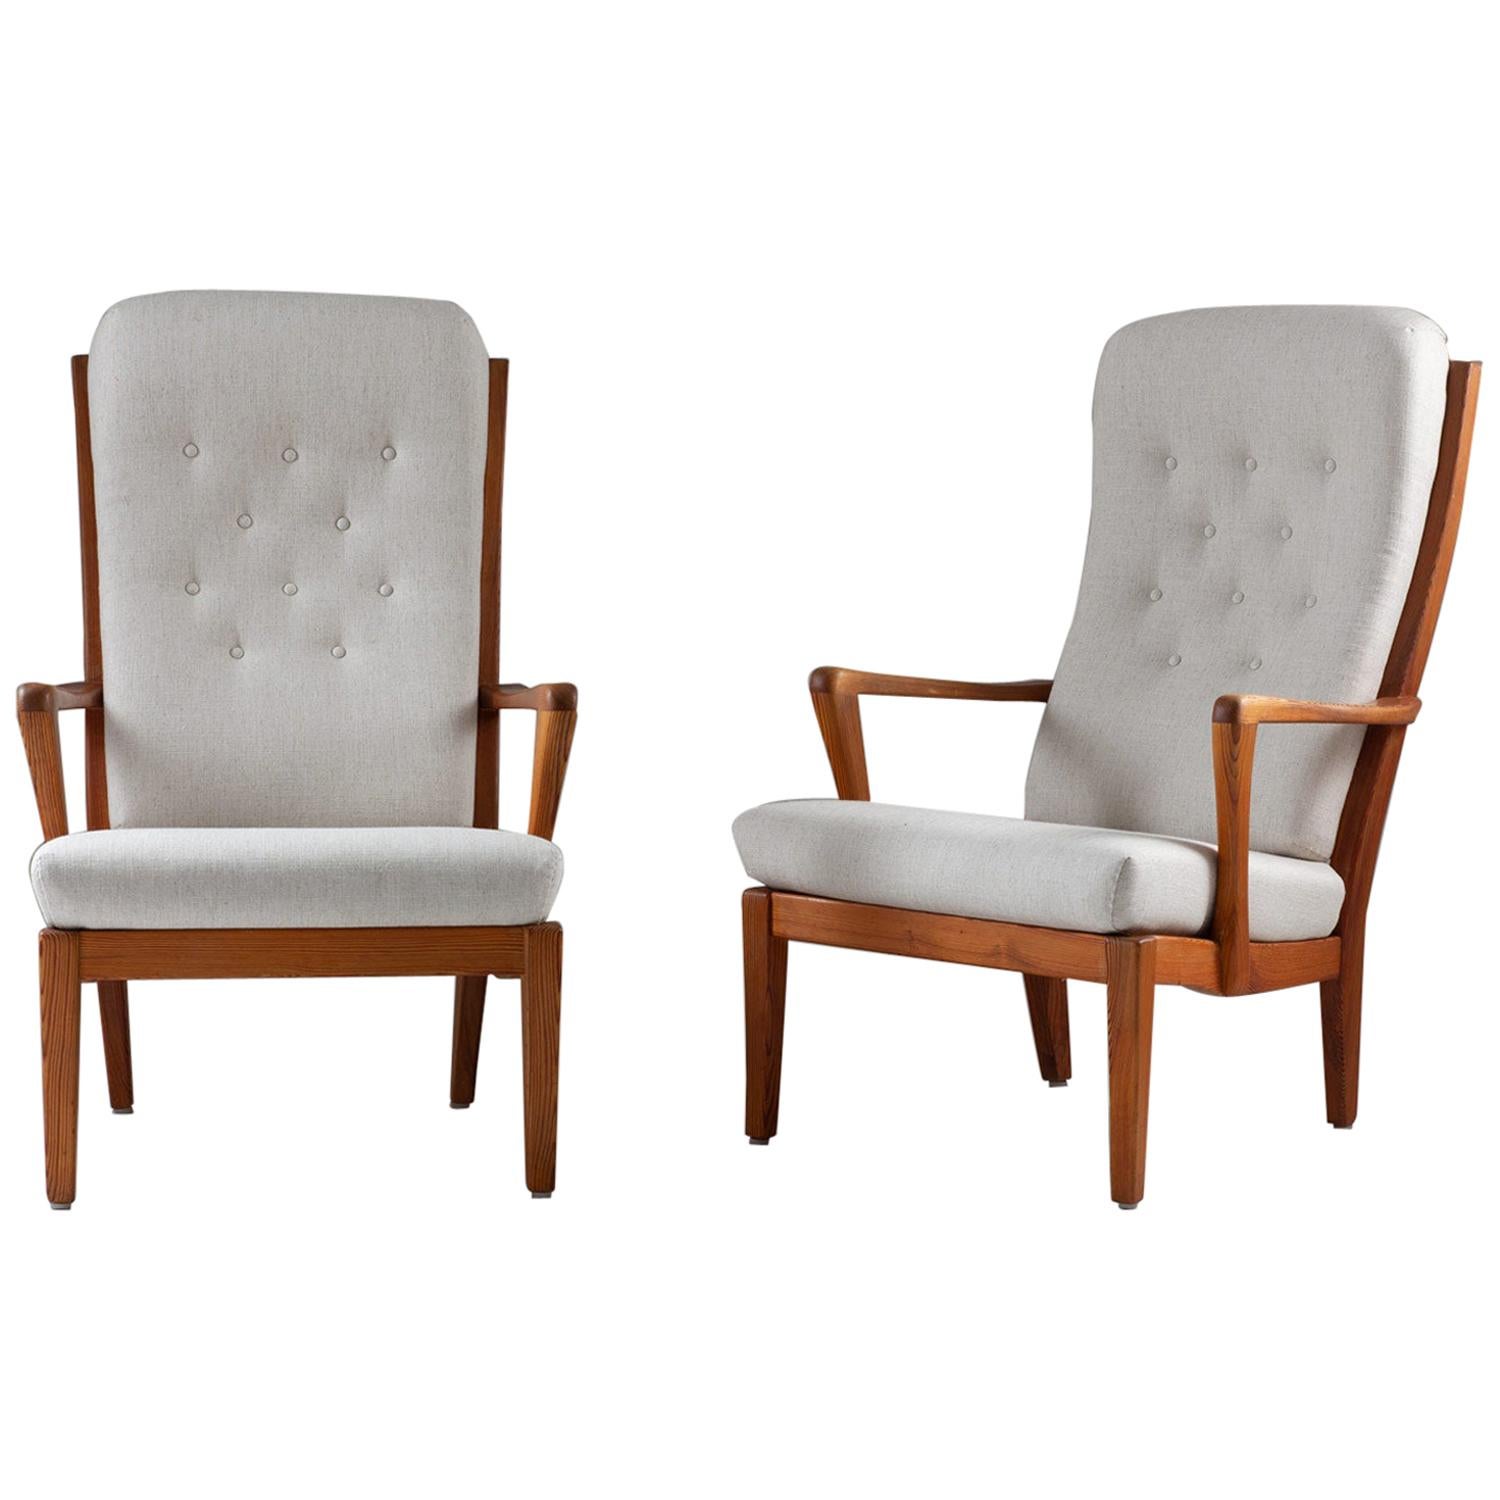 Pair of Scandinavian Midcentury Lounge Chairs by Carl Malmsten